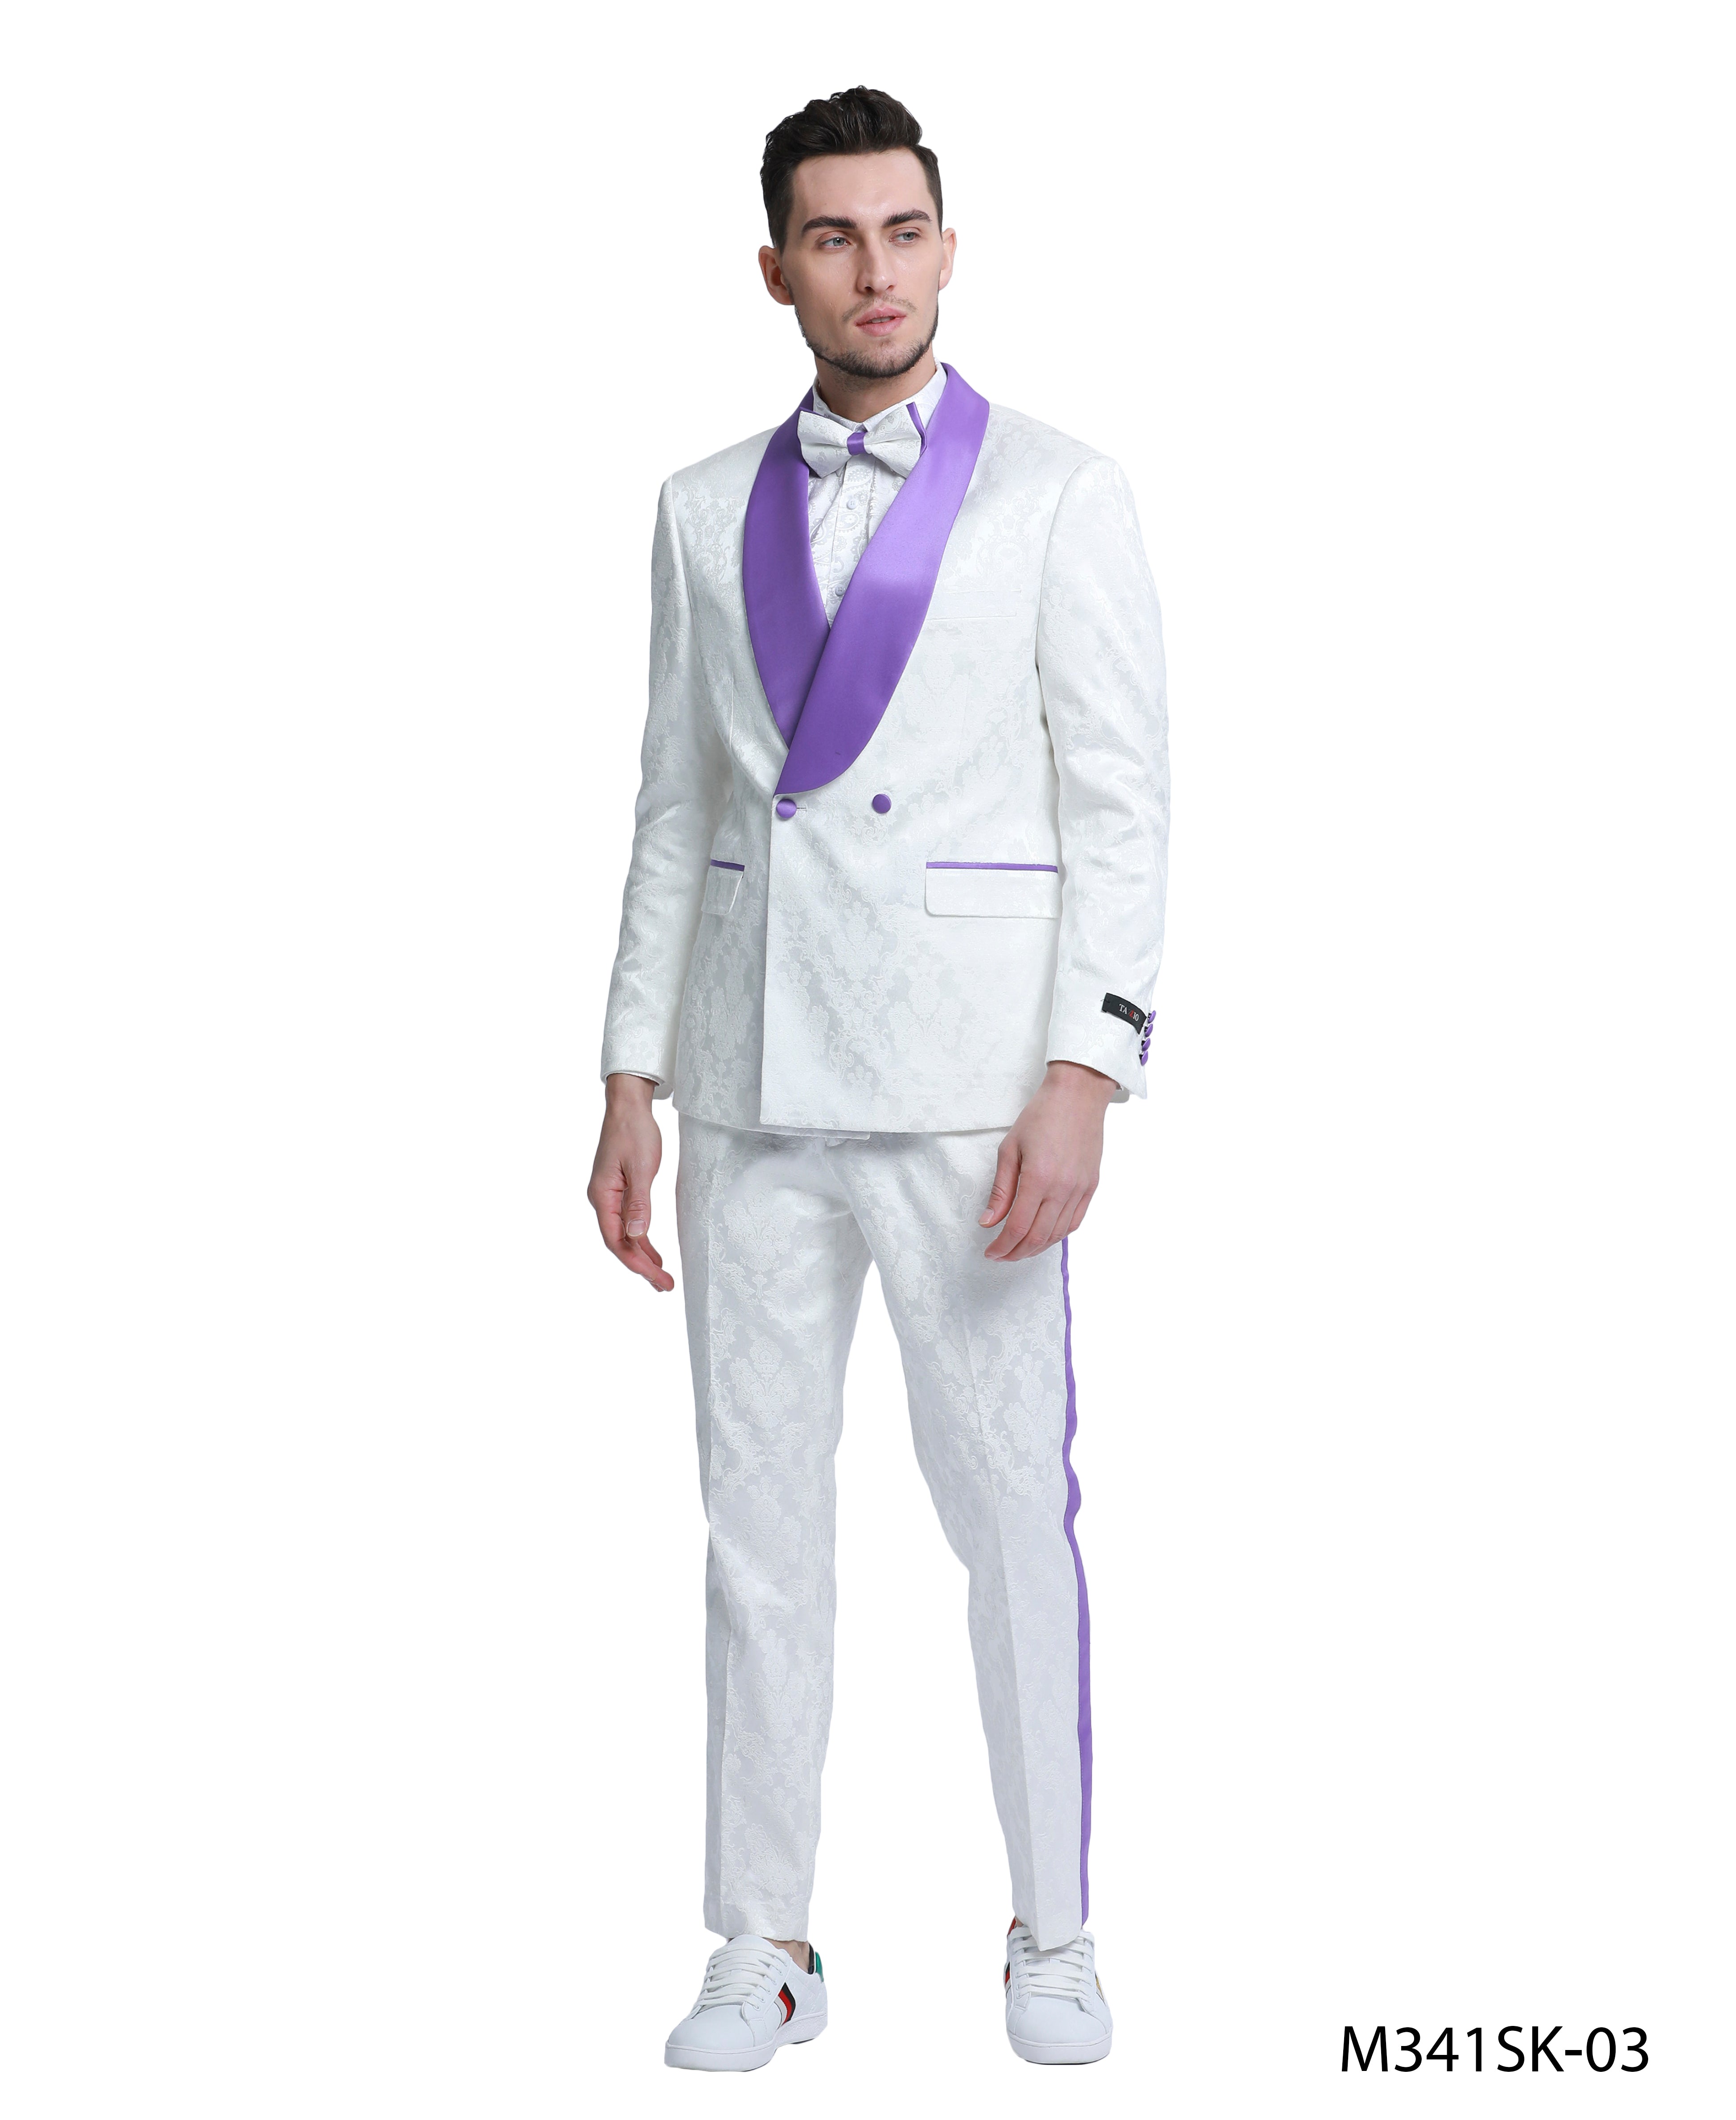 Tazio Paisley Skinny Fit Shawl Collar Suit, White & Purple